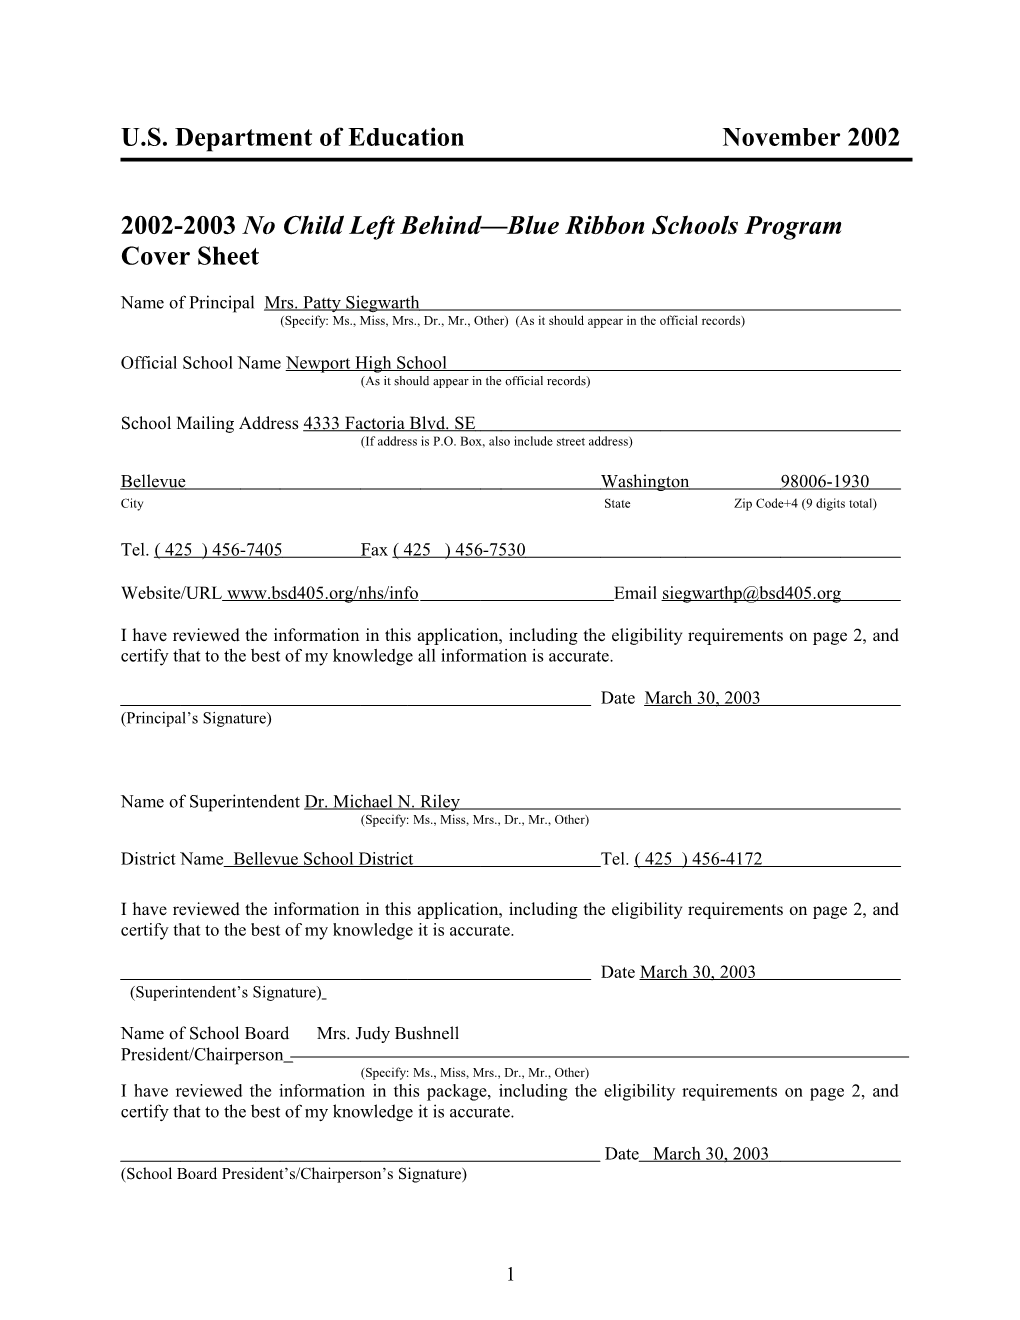 Newport High School 2003 No Child Left Behind-Blue Ribbon School (Msword)